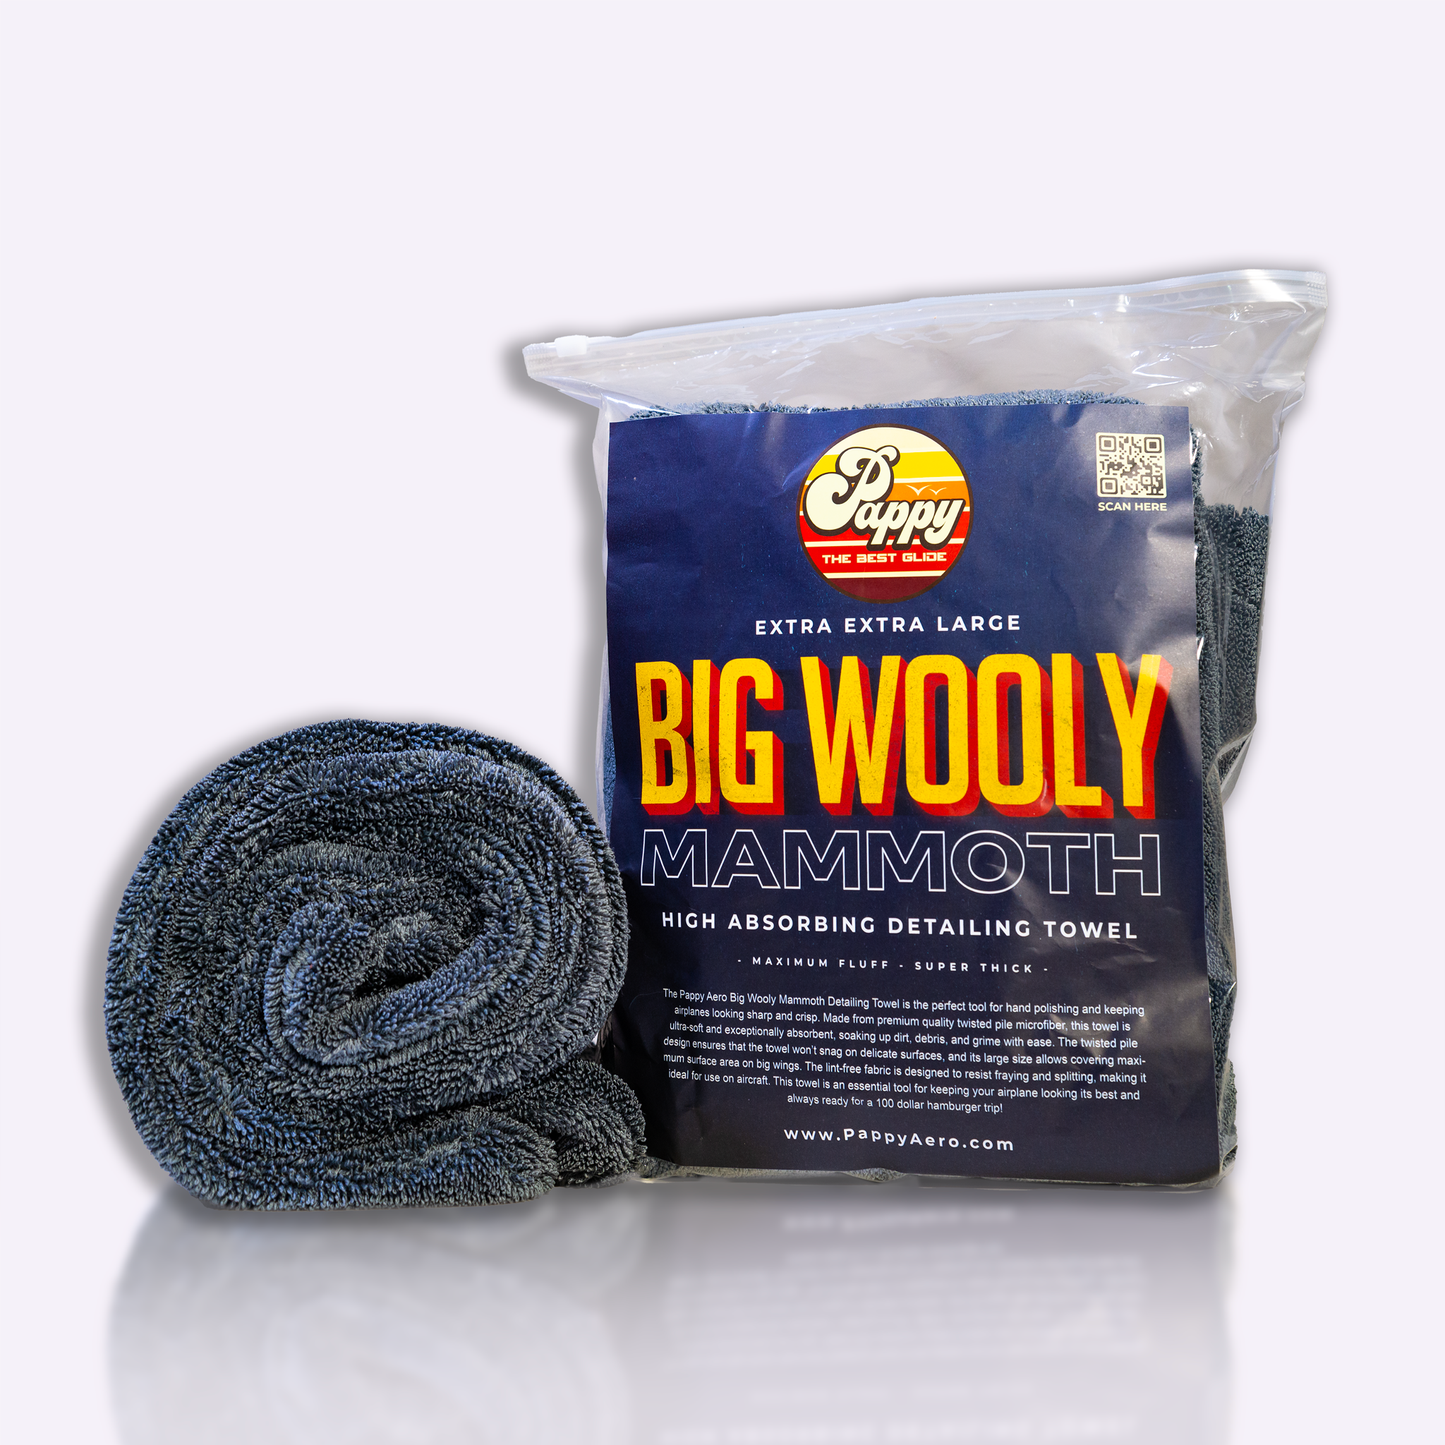 Big Wooly Mammoth Towel